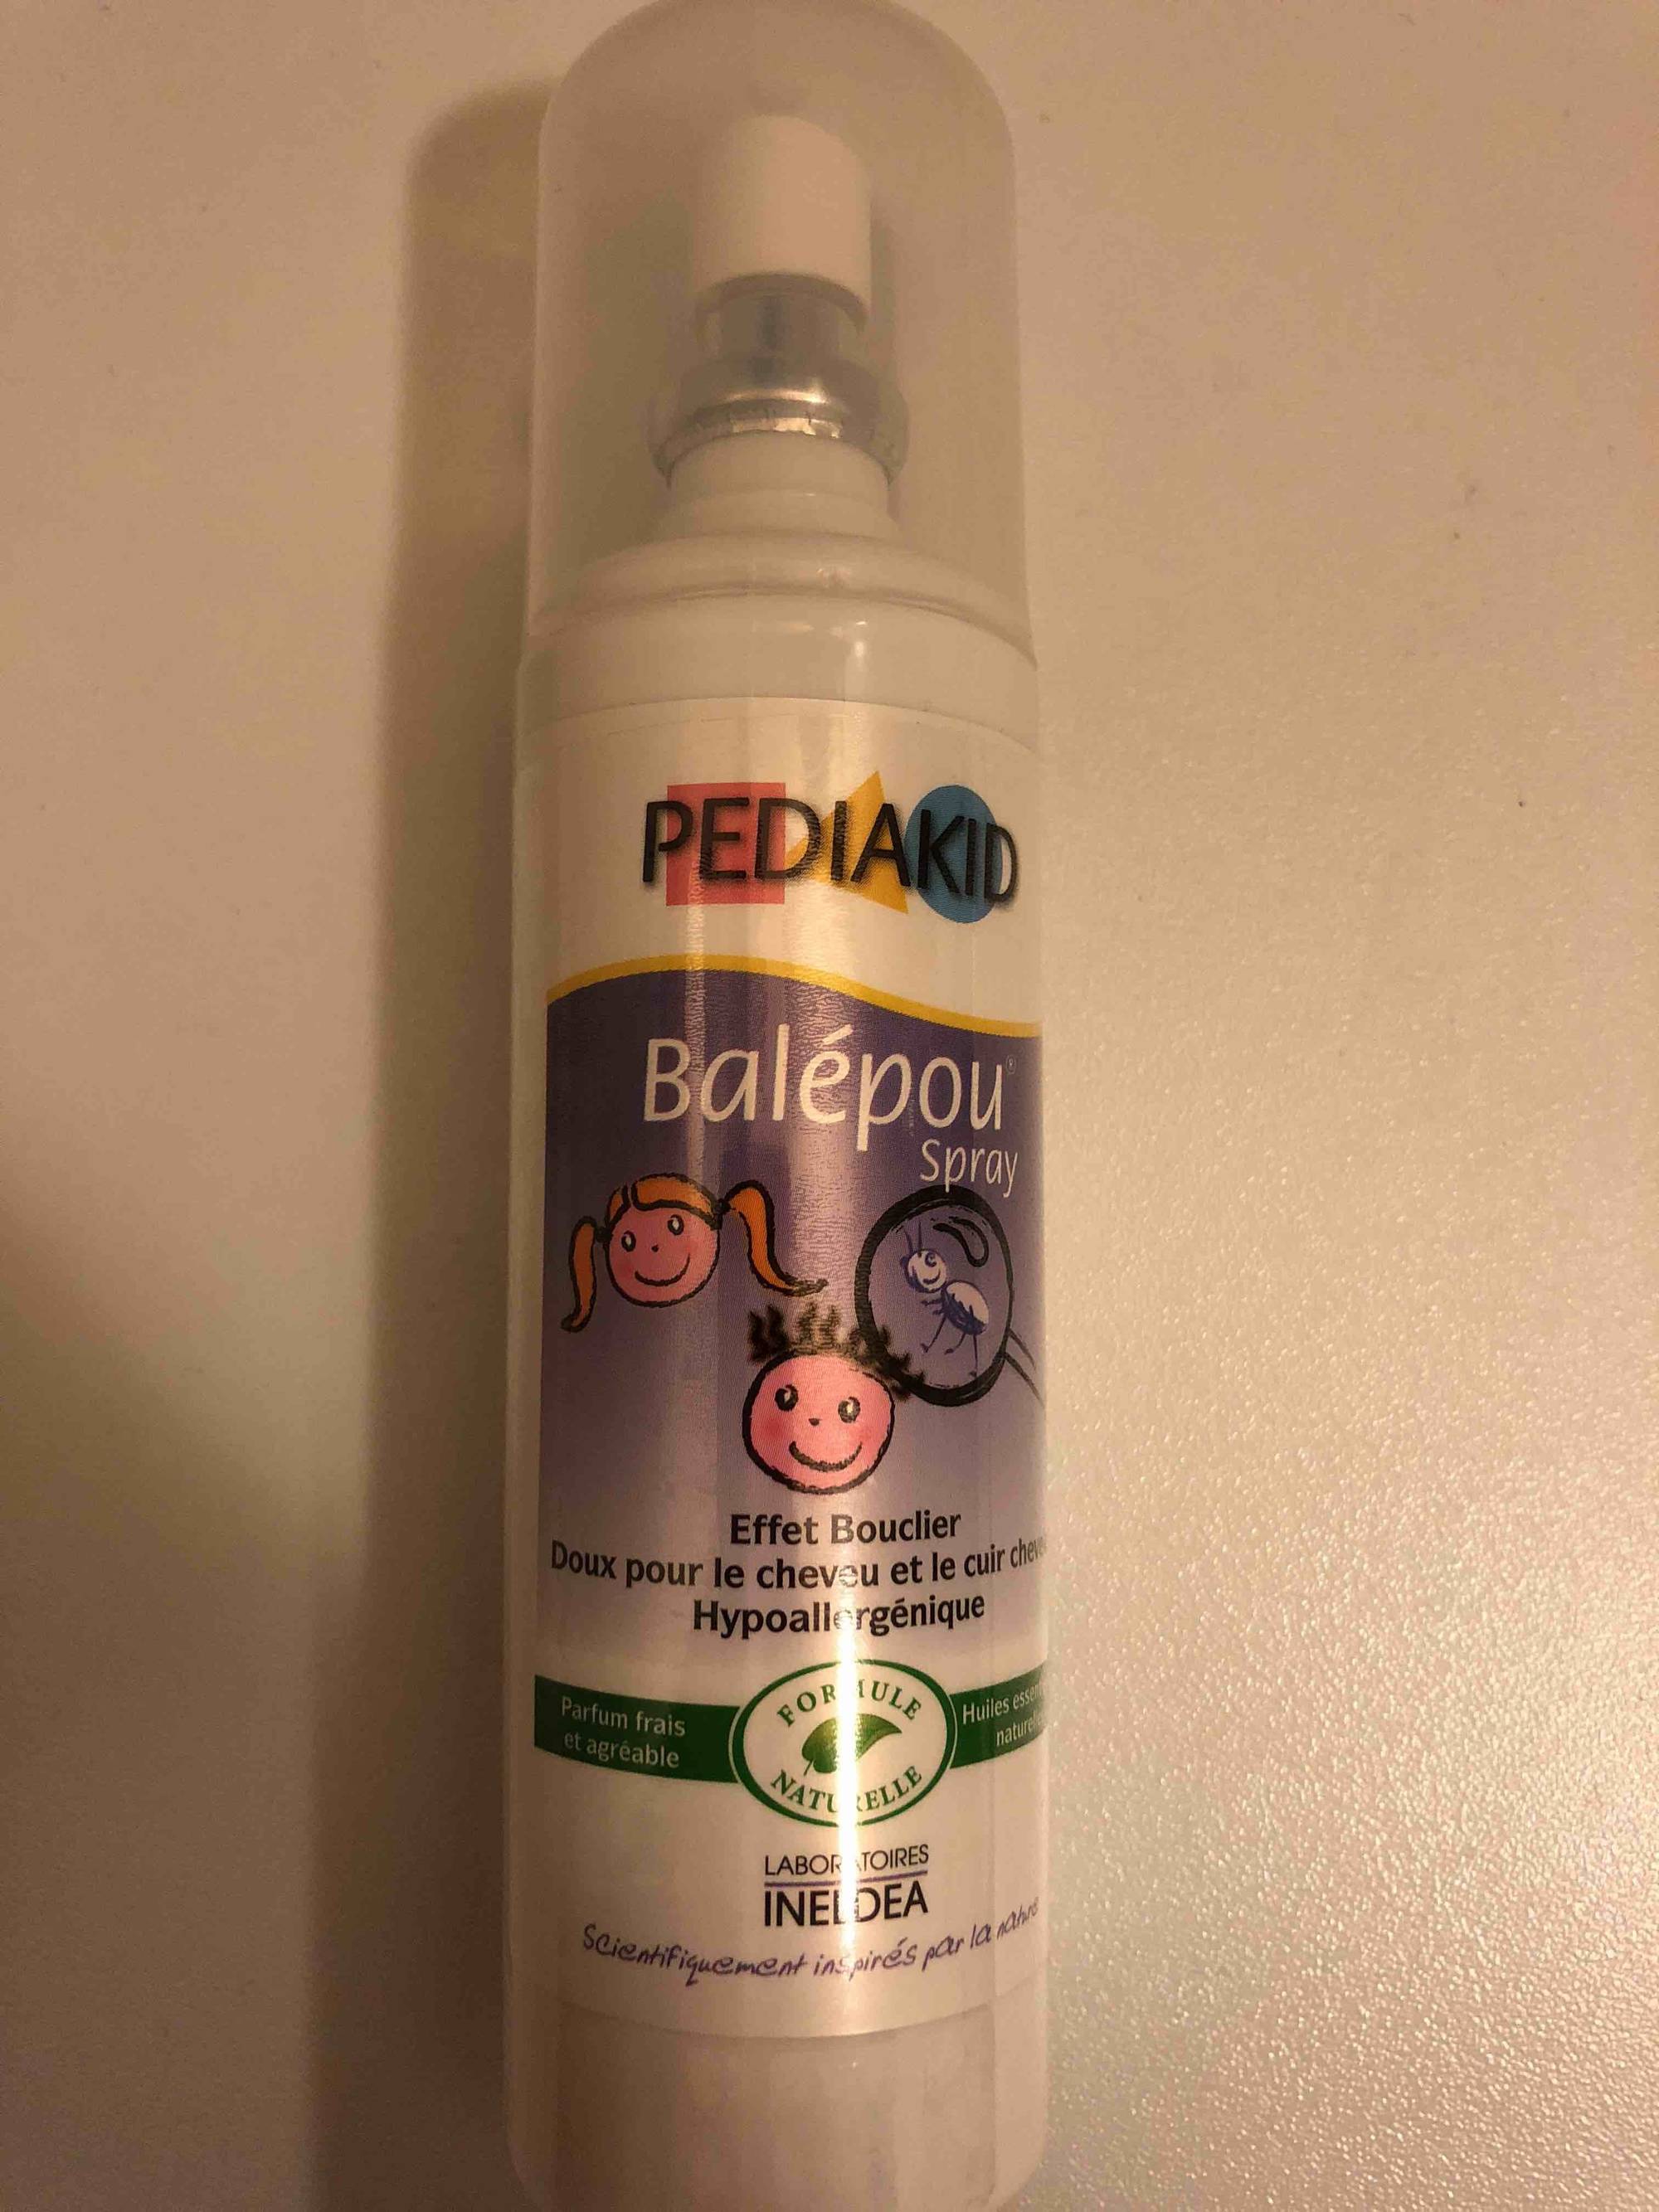 PÉDIAKID - Balépou Spray - Effet boudier doux